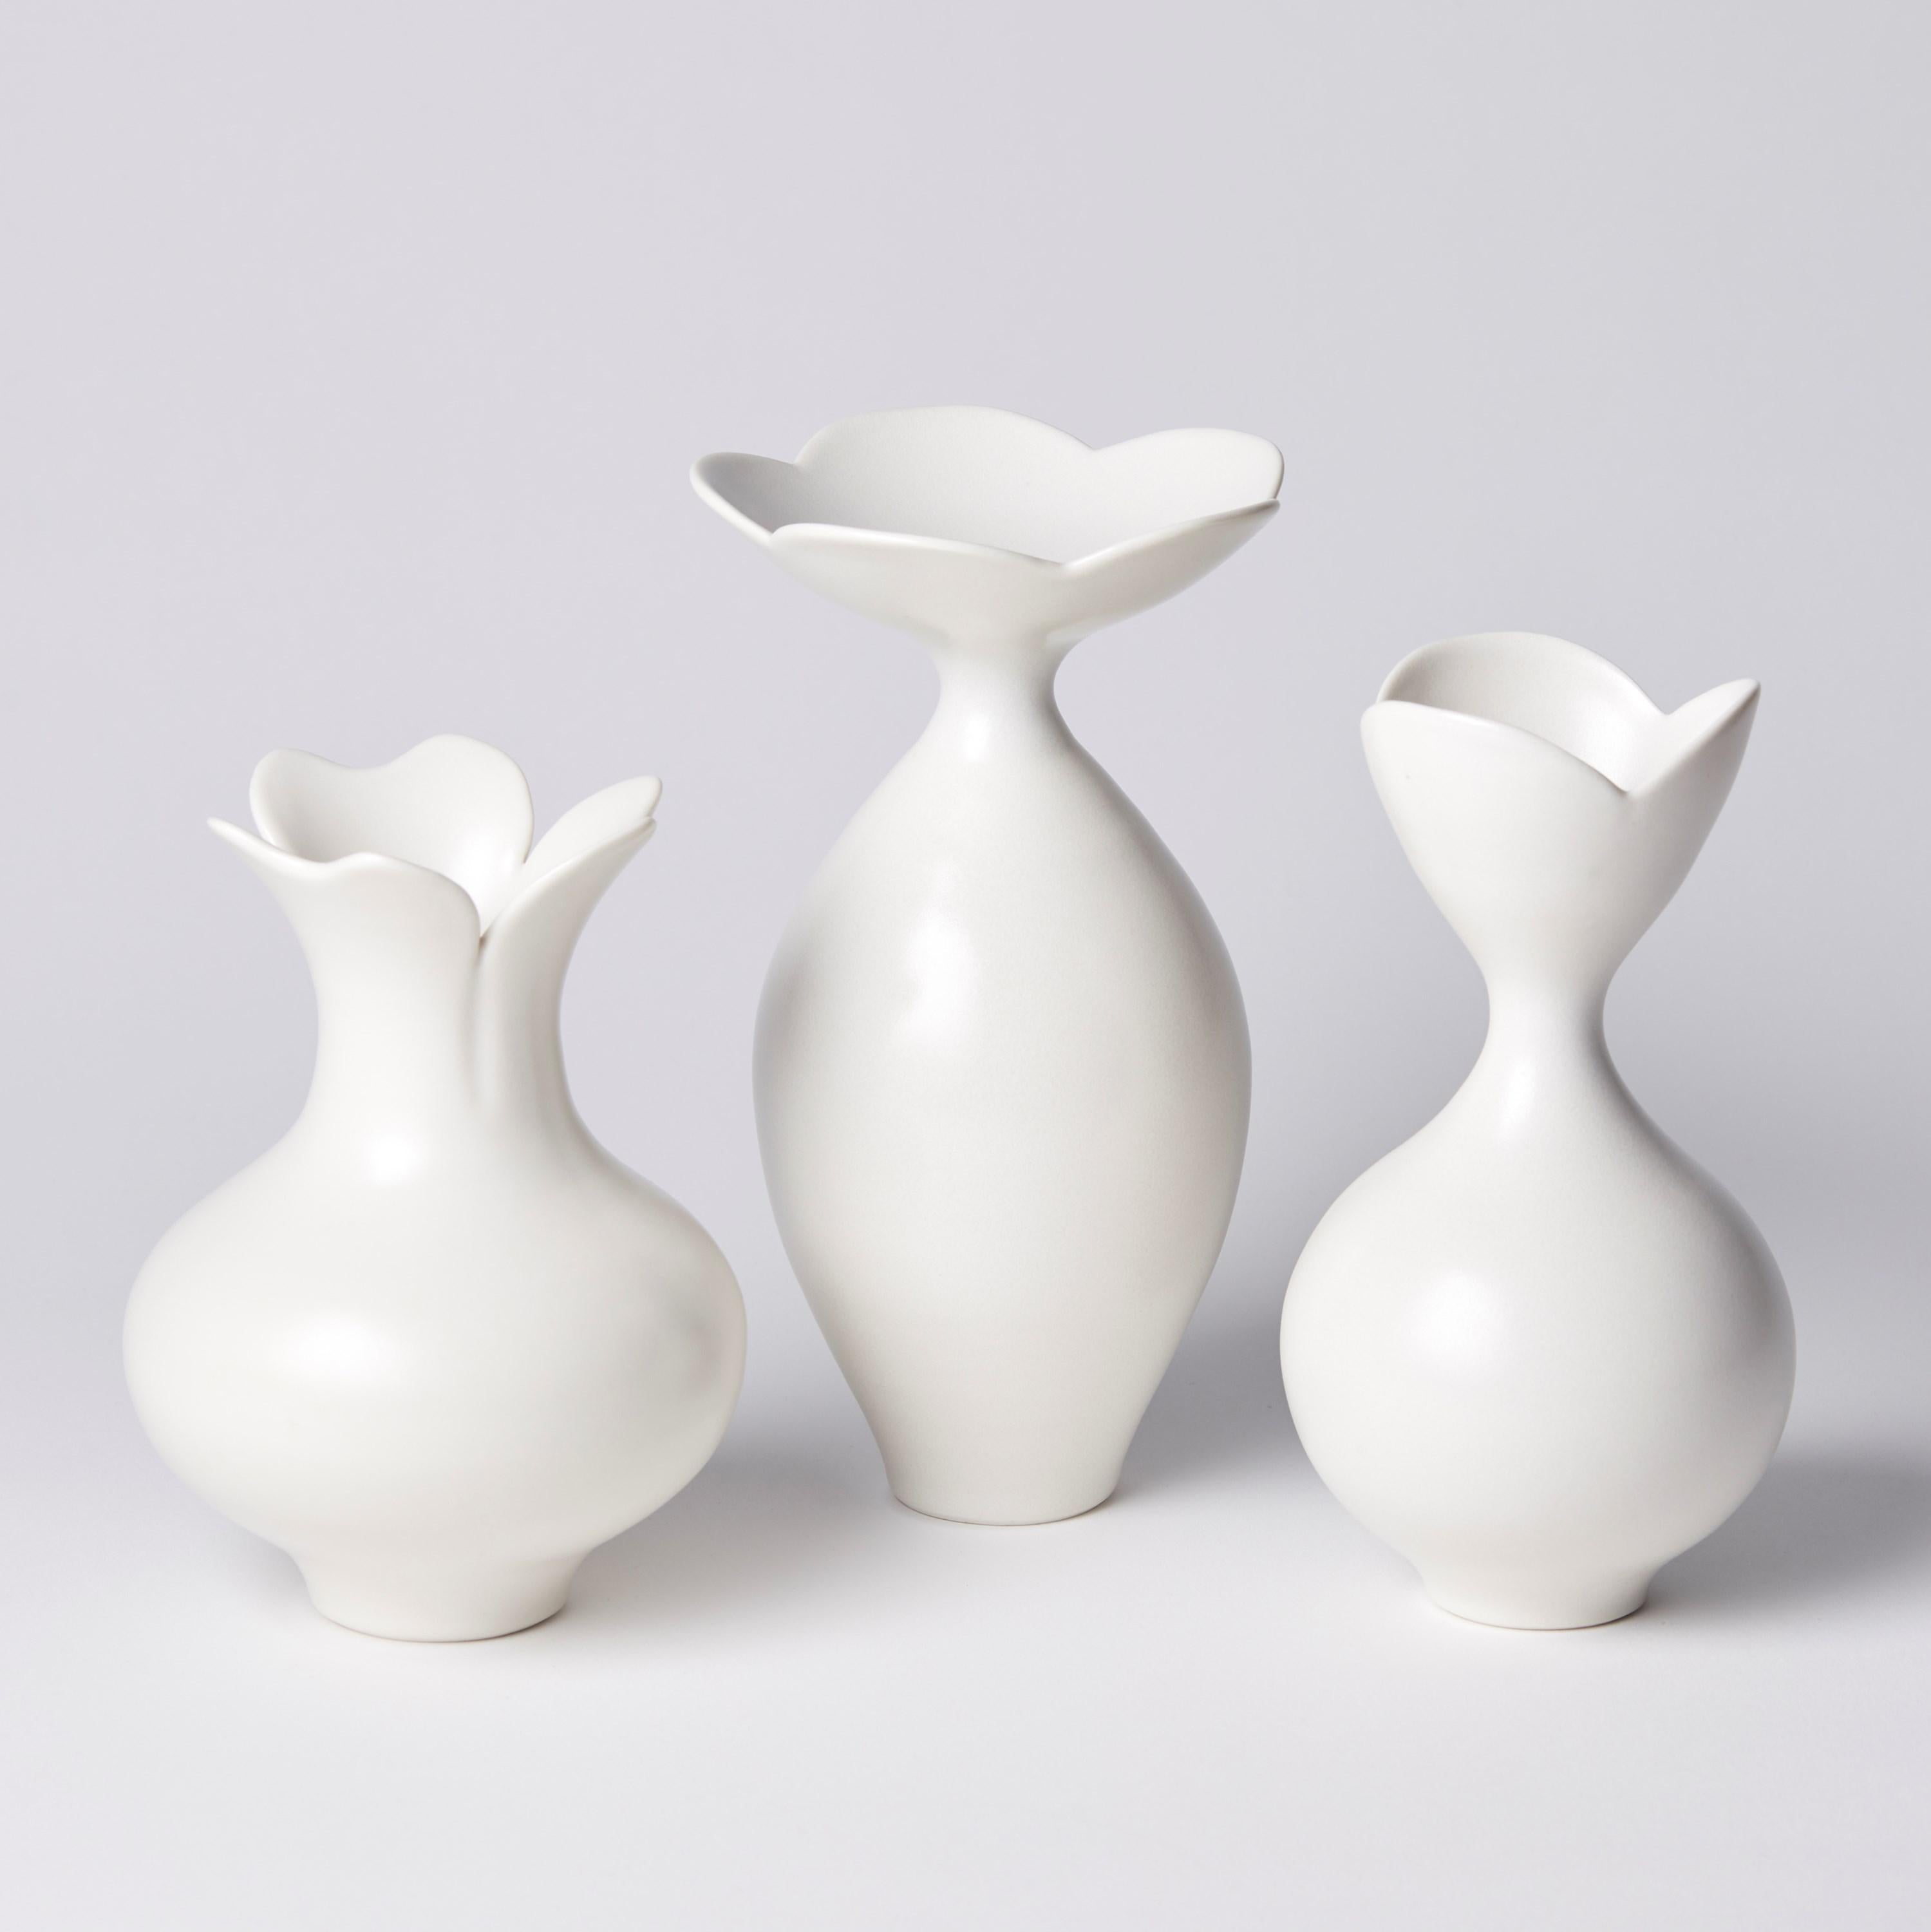 Organic Modern Vase with Foliate Rim I, a Unique White Porcelain Vase by Vivienne Foley